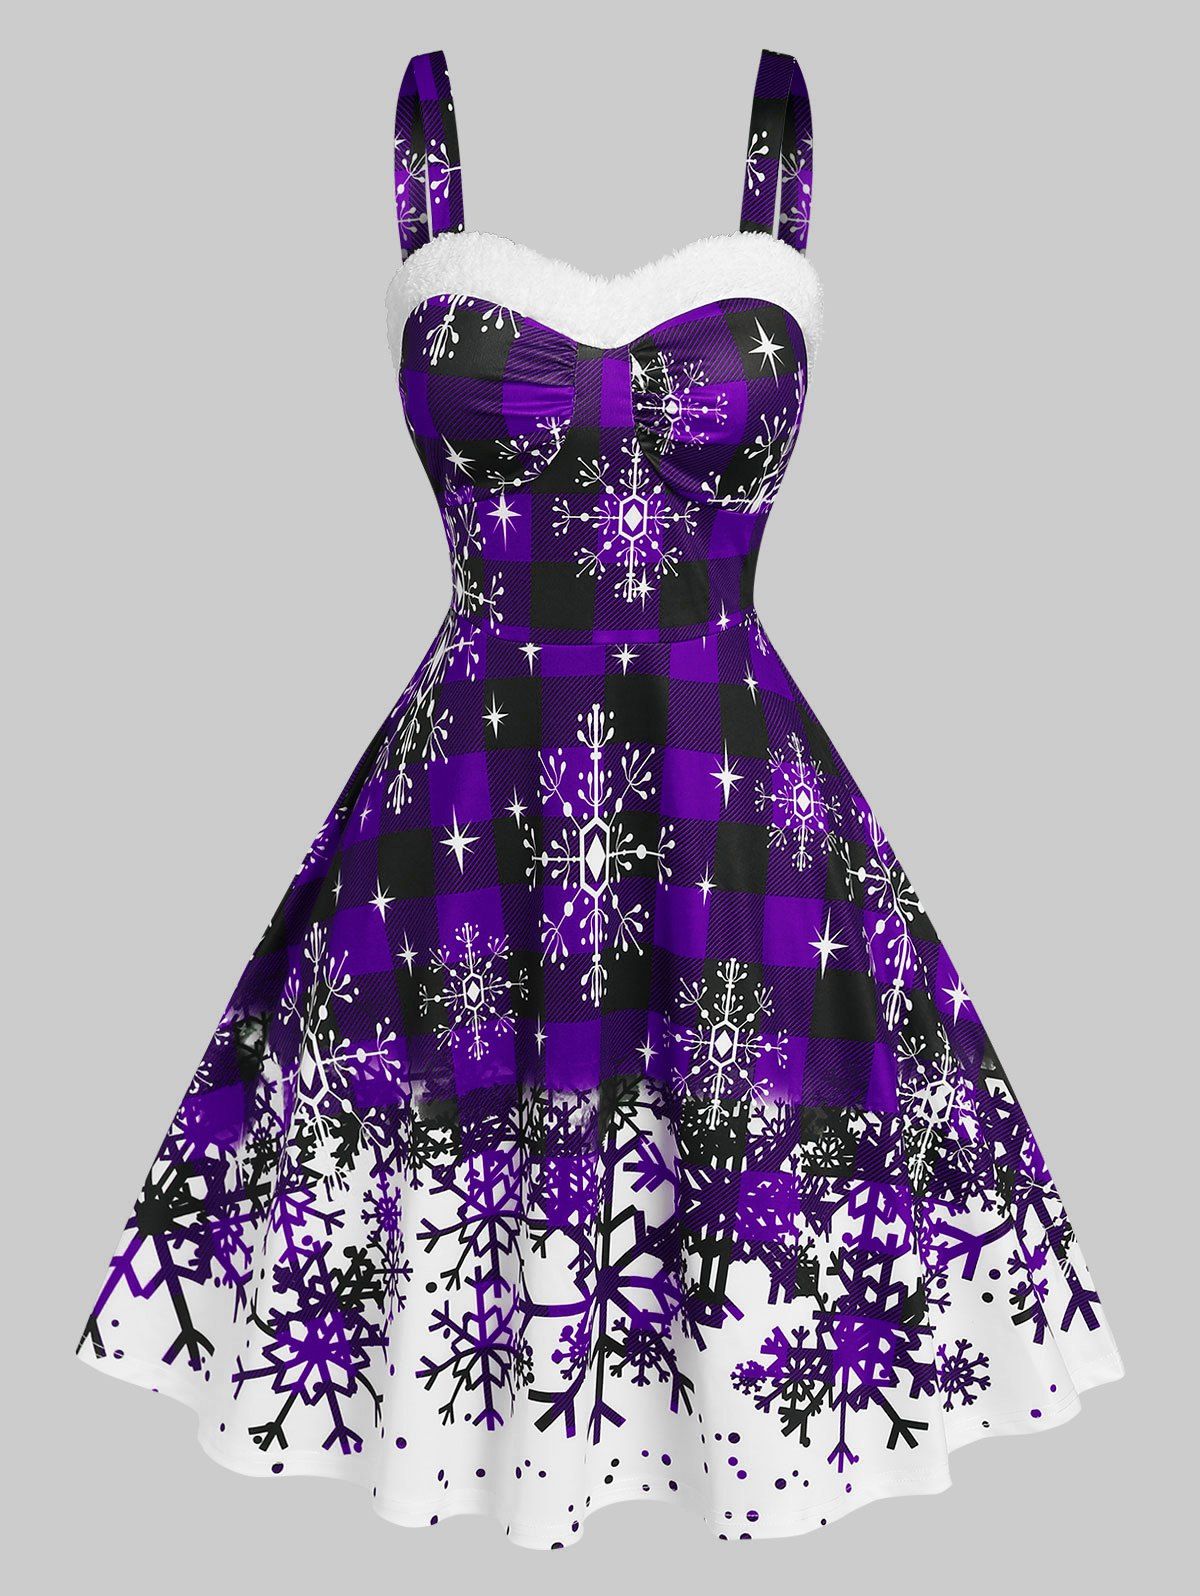 Christmas Party Dress Plaid Snowflake Print Sleeveless Dress - PURPLE XL